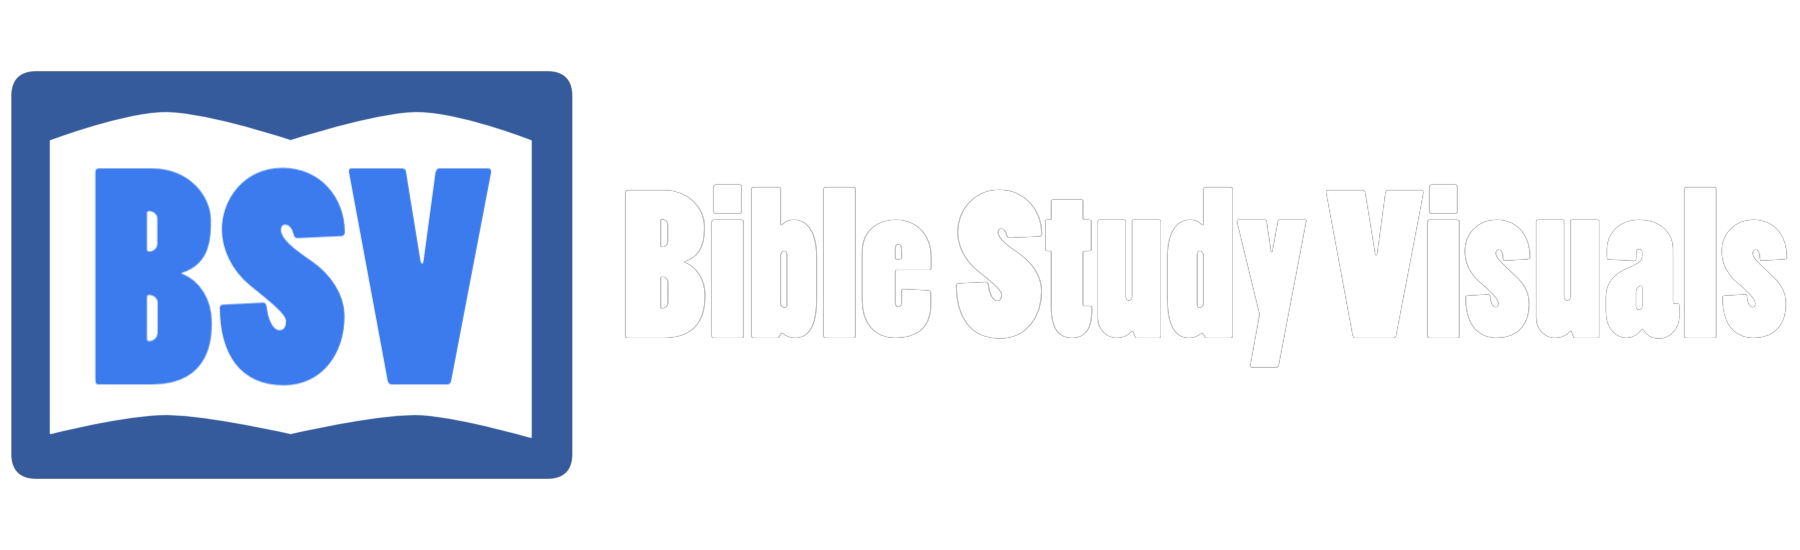 Bible Study Visuals